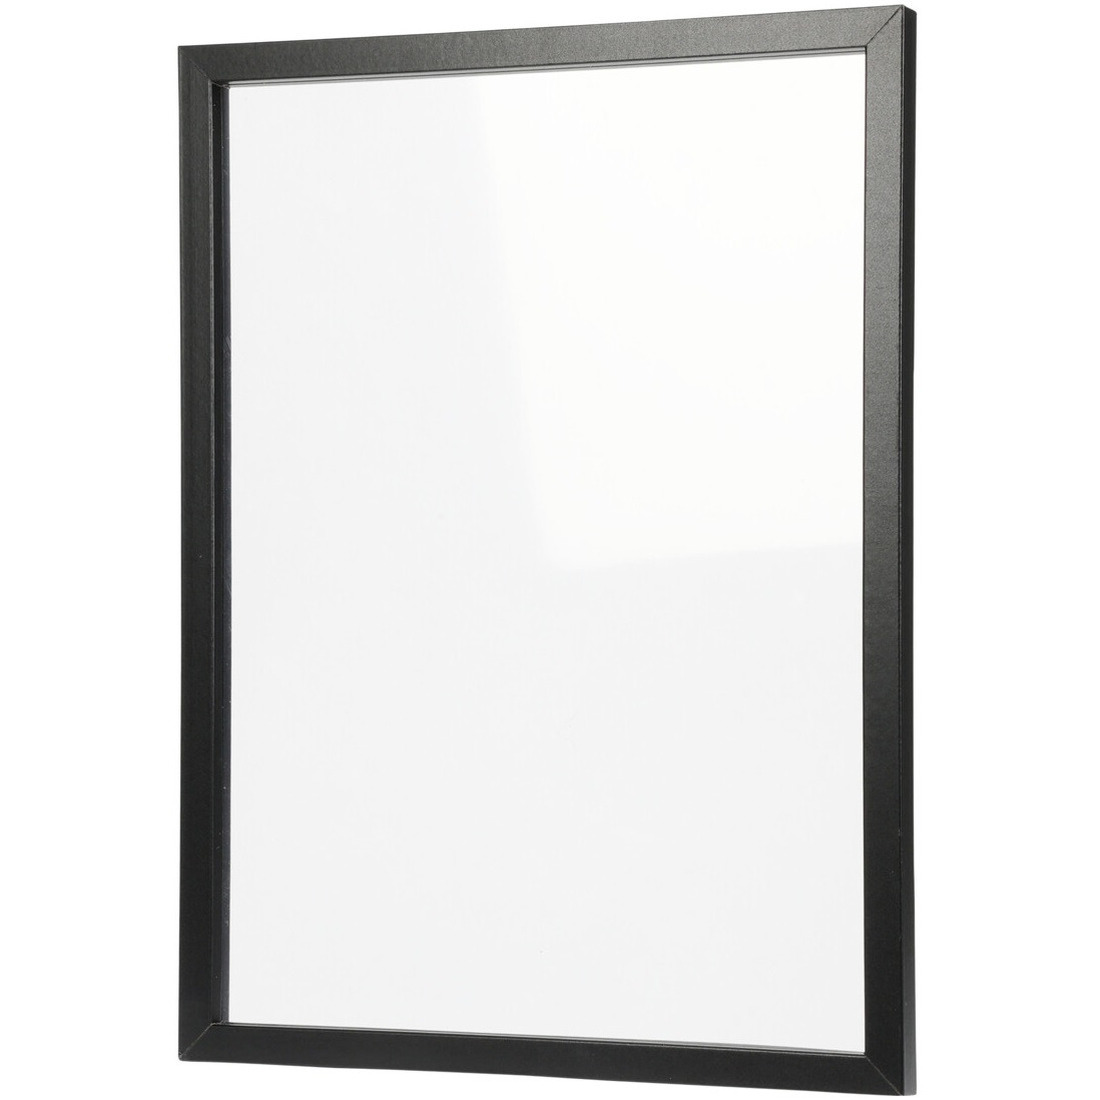 Memobord-schrijfbord incl 2x stiften wit-zwart 30 x 40 cm